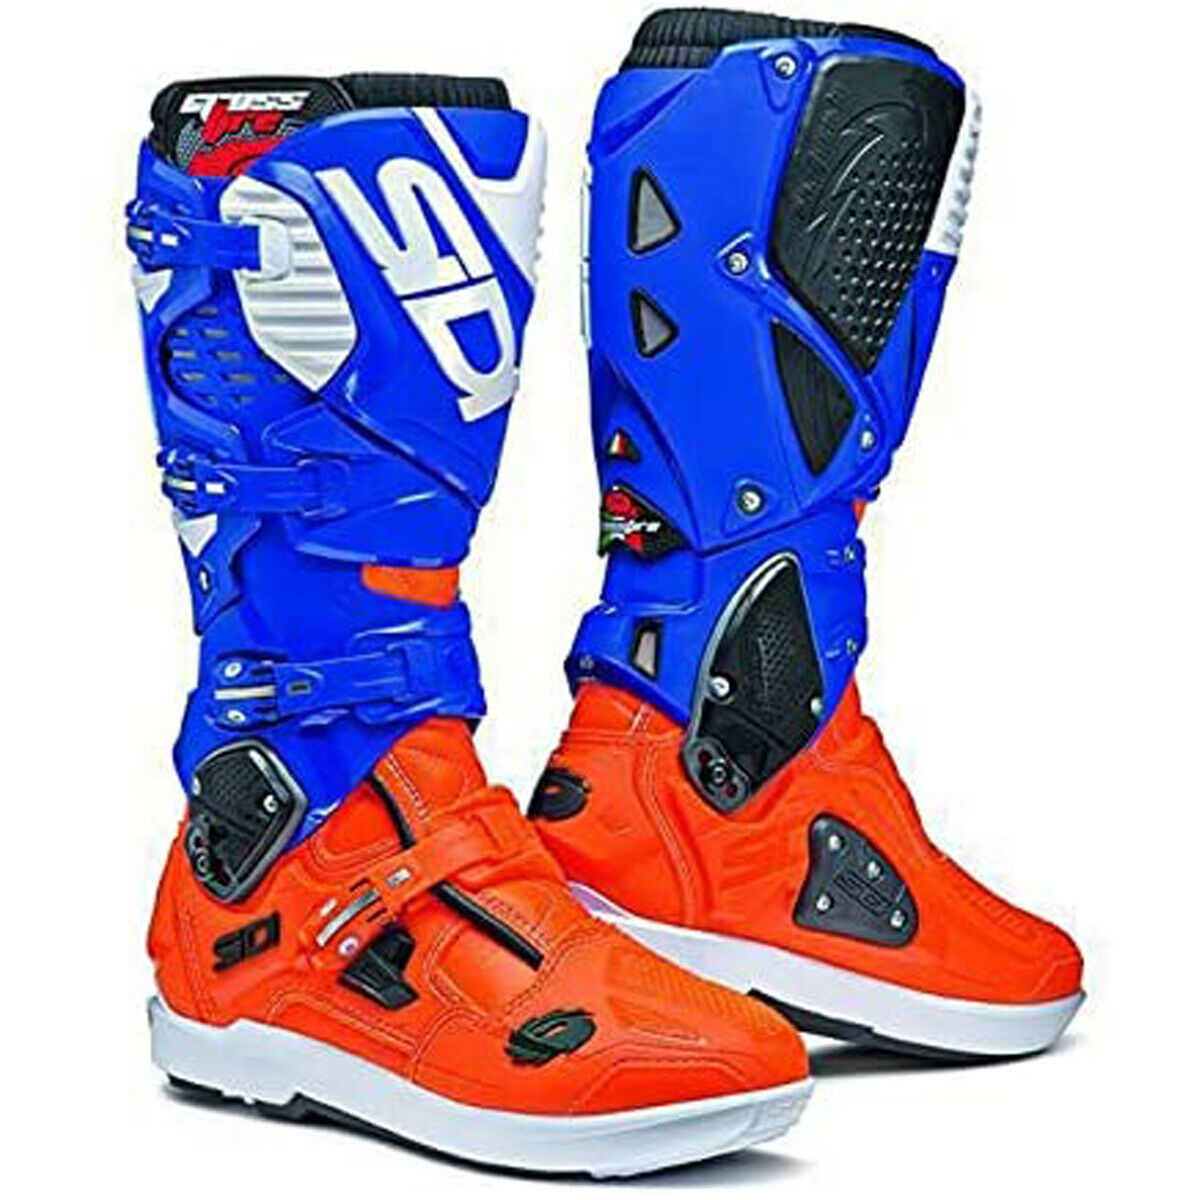 Sidi Crossfire 3 SRS Boots - Fluorescent Orange/Blue